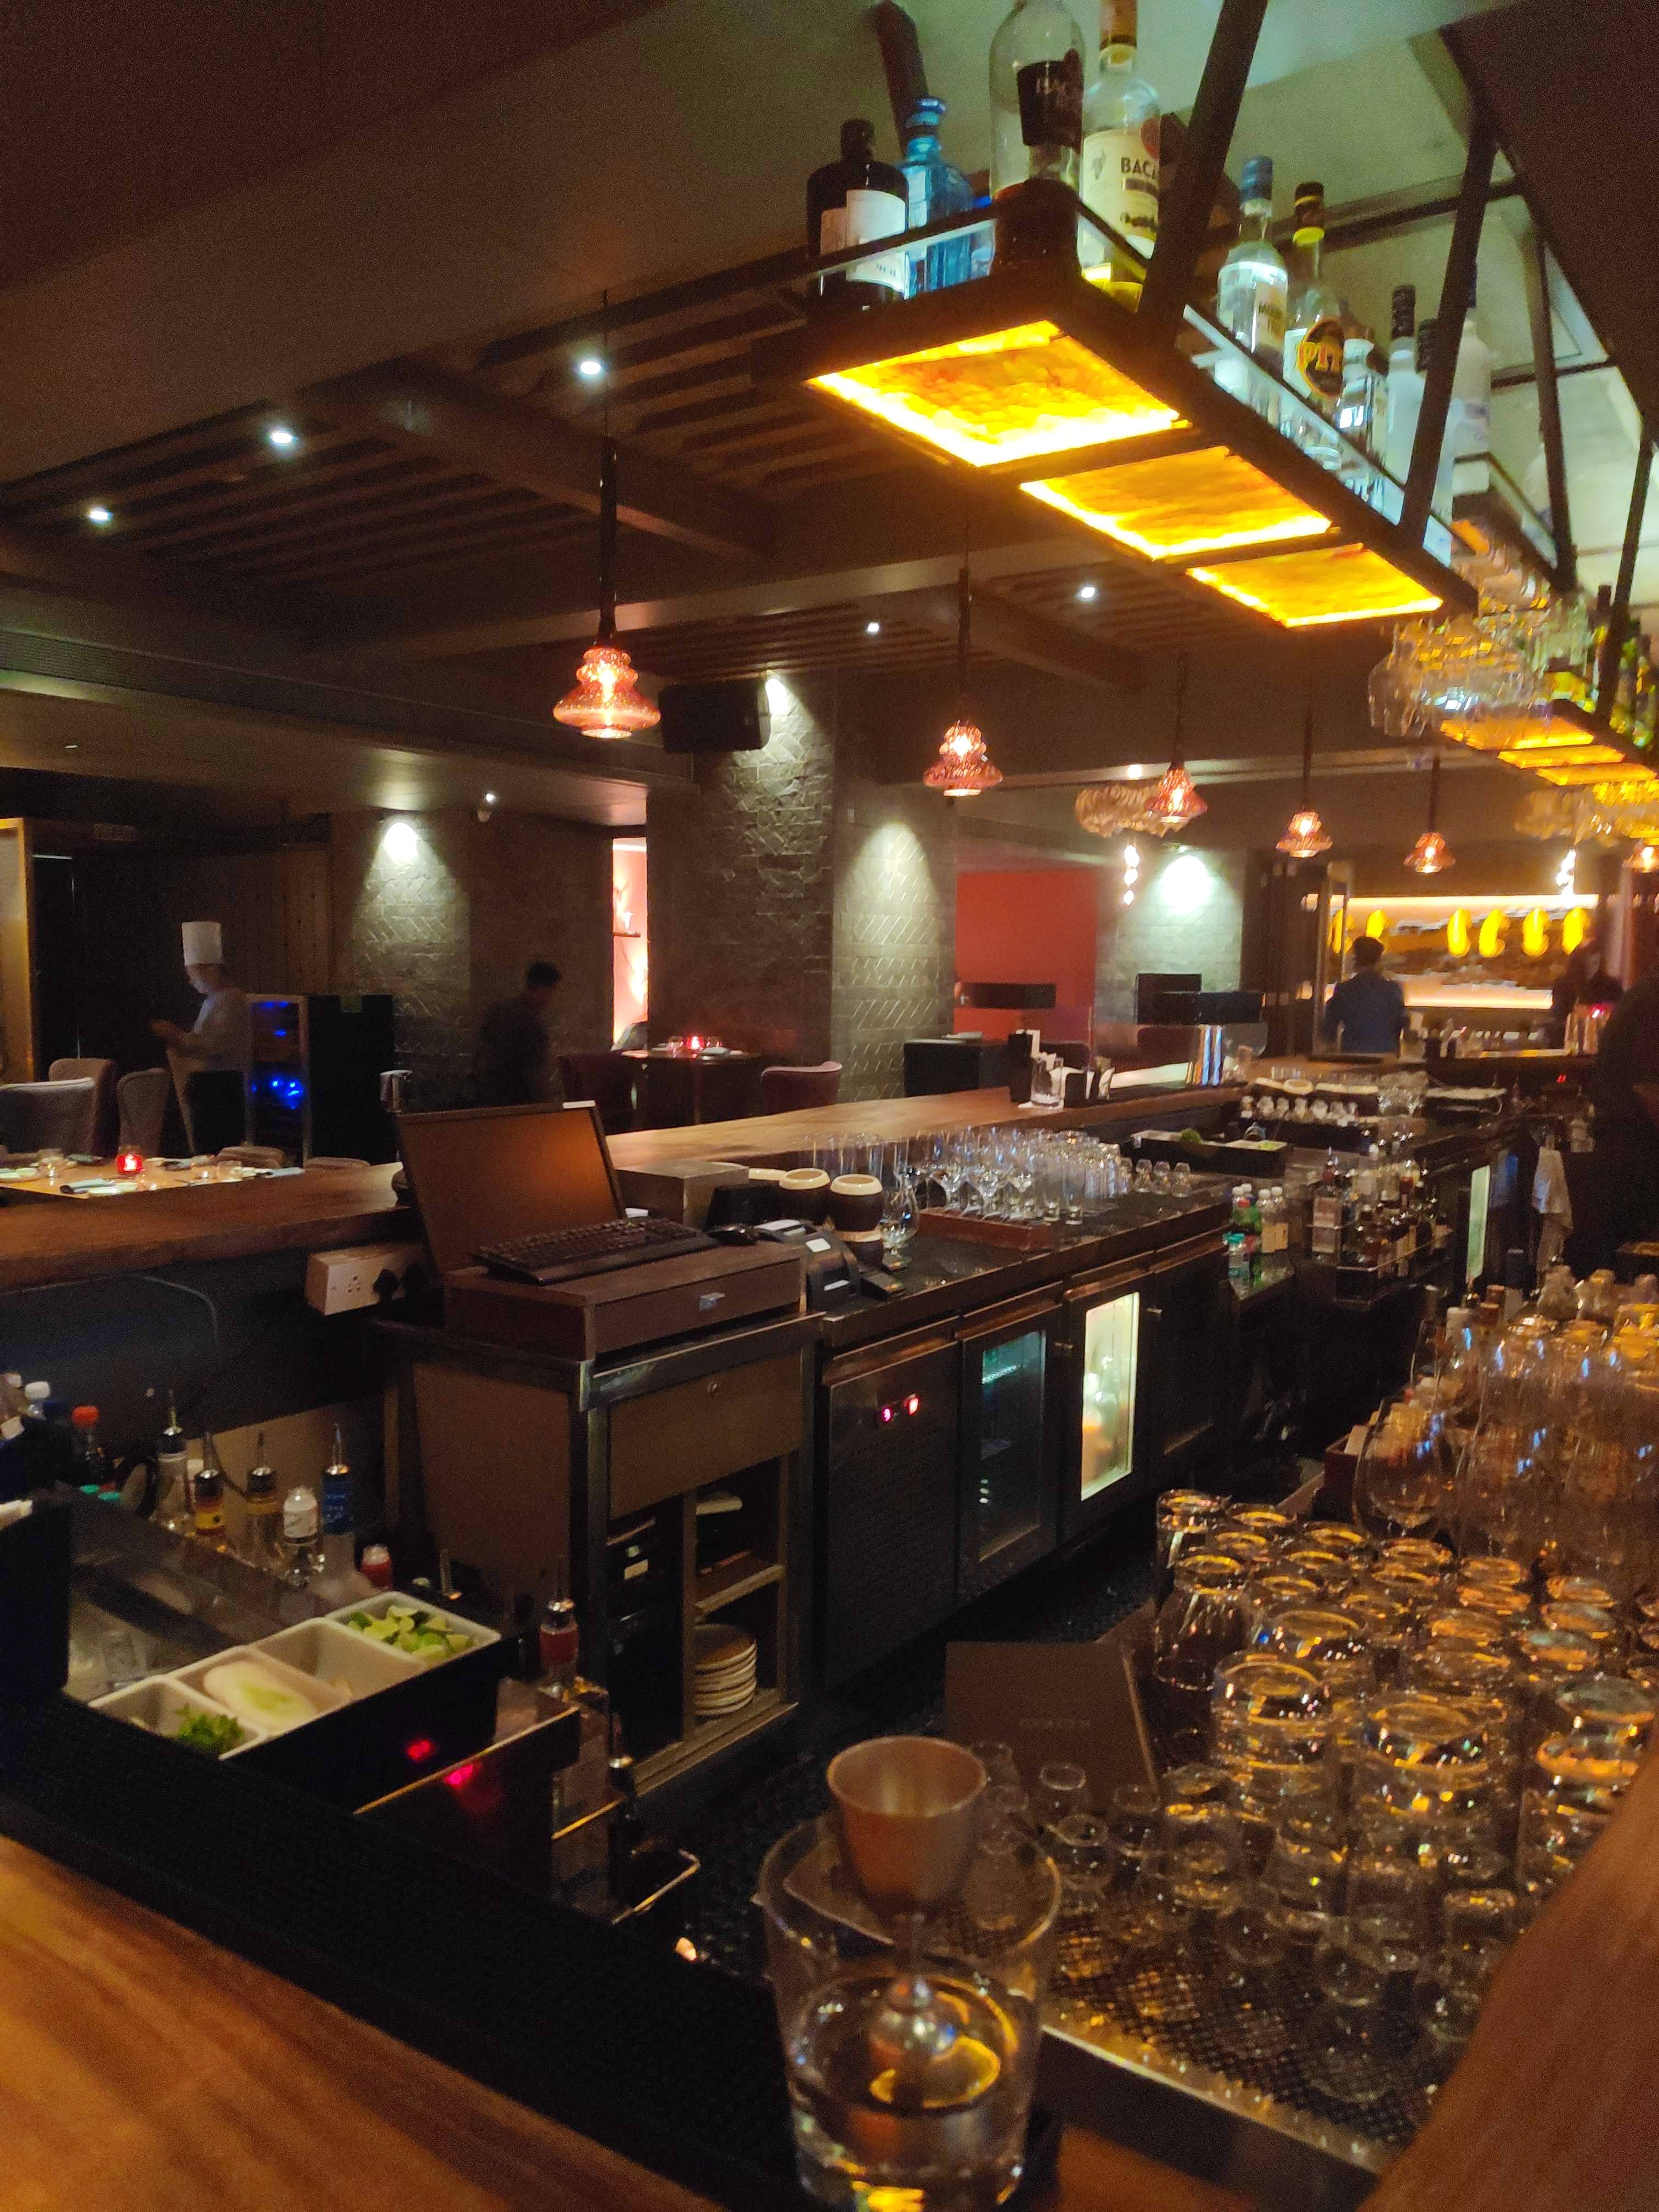 Restaurant,Tavern,Drinking establishment,Pub,Bar,Building,Room,Business,Interior design